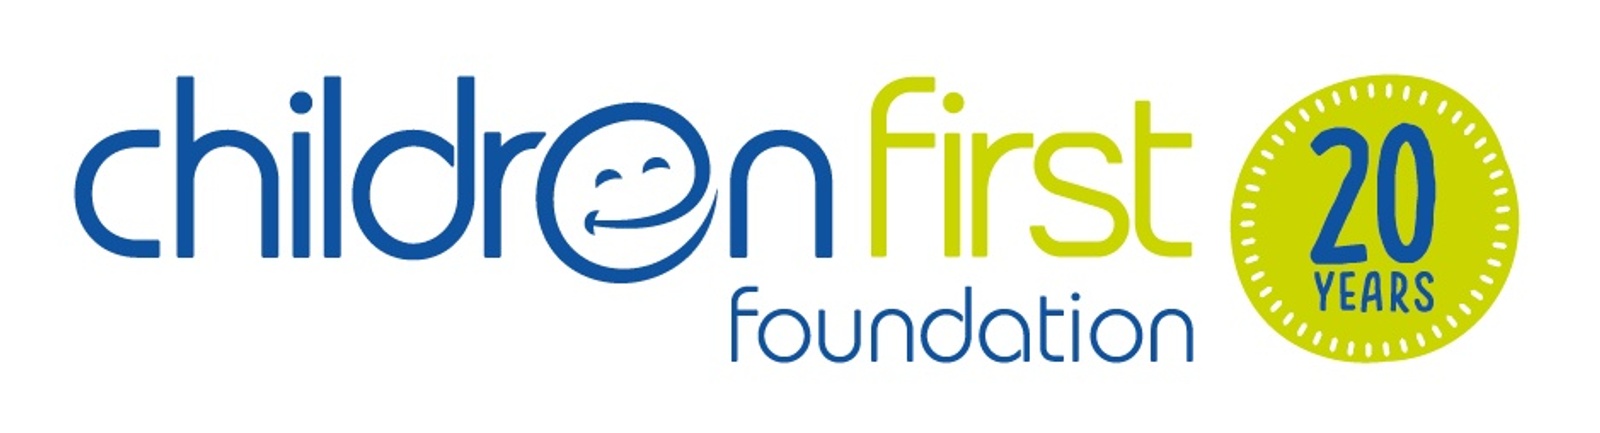 Banner image for Children First Foundation Sparkling Lunch